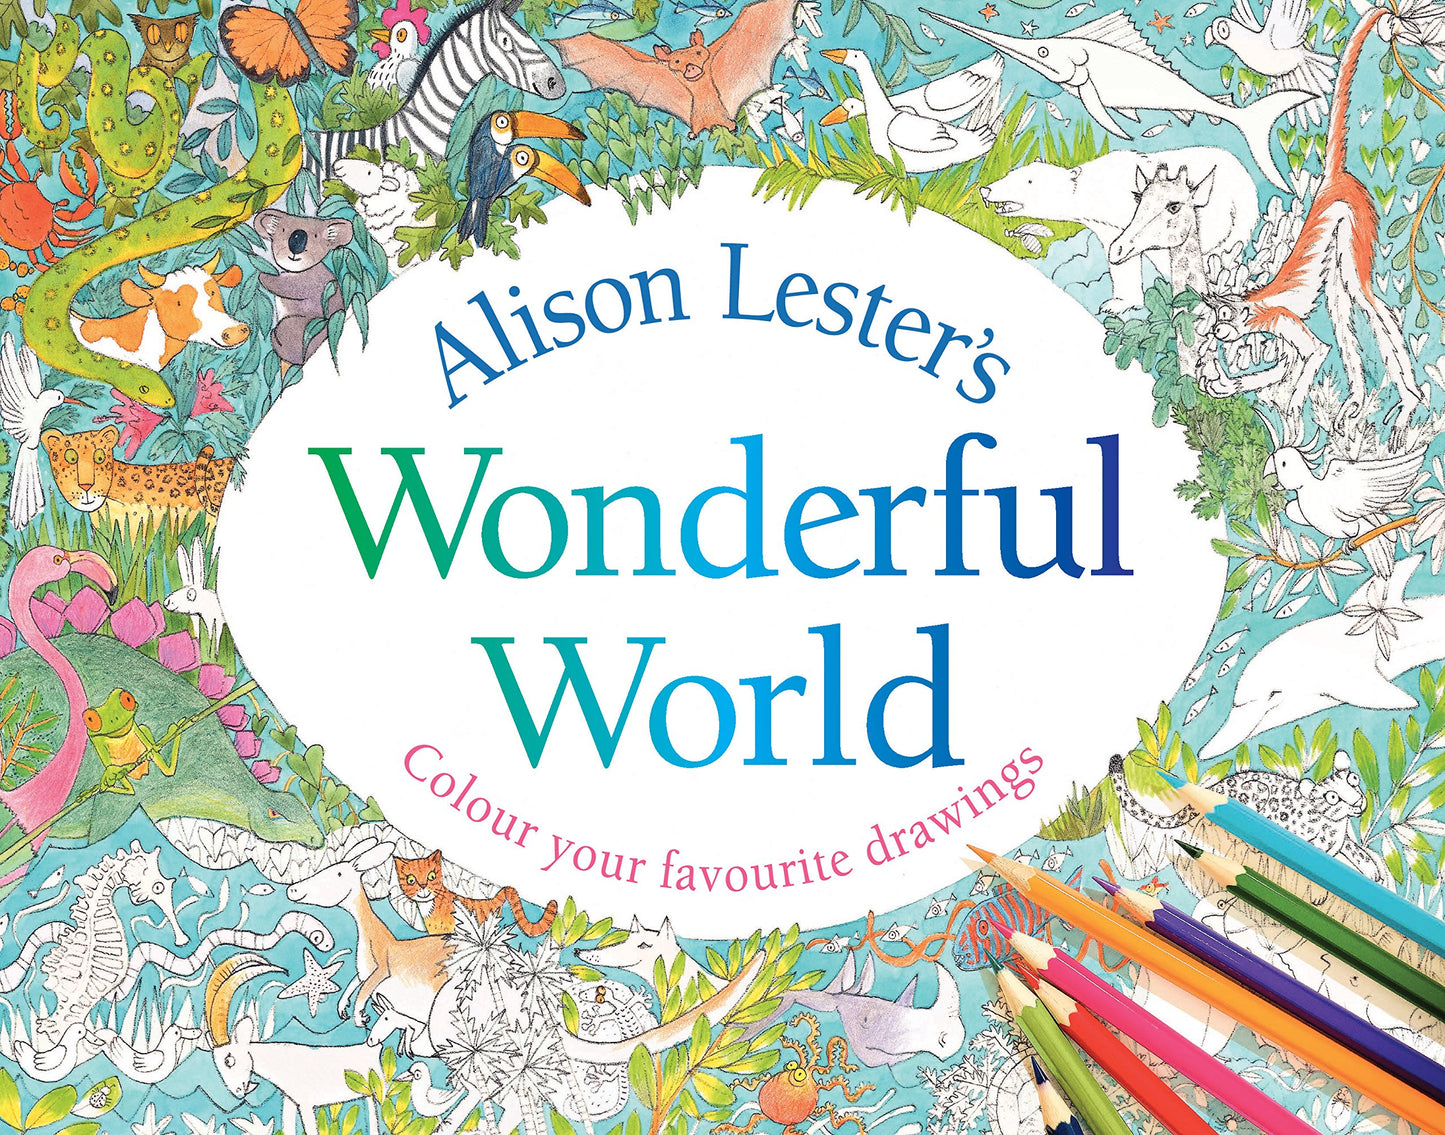 ALISON LESTER'S WONDERFUL WORLD